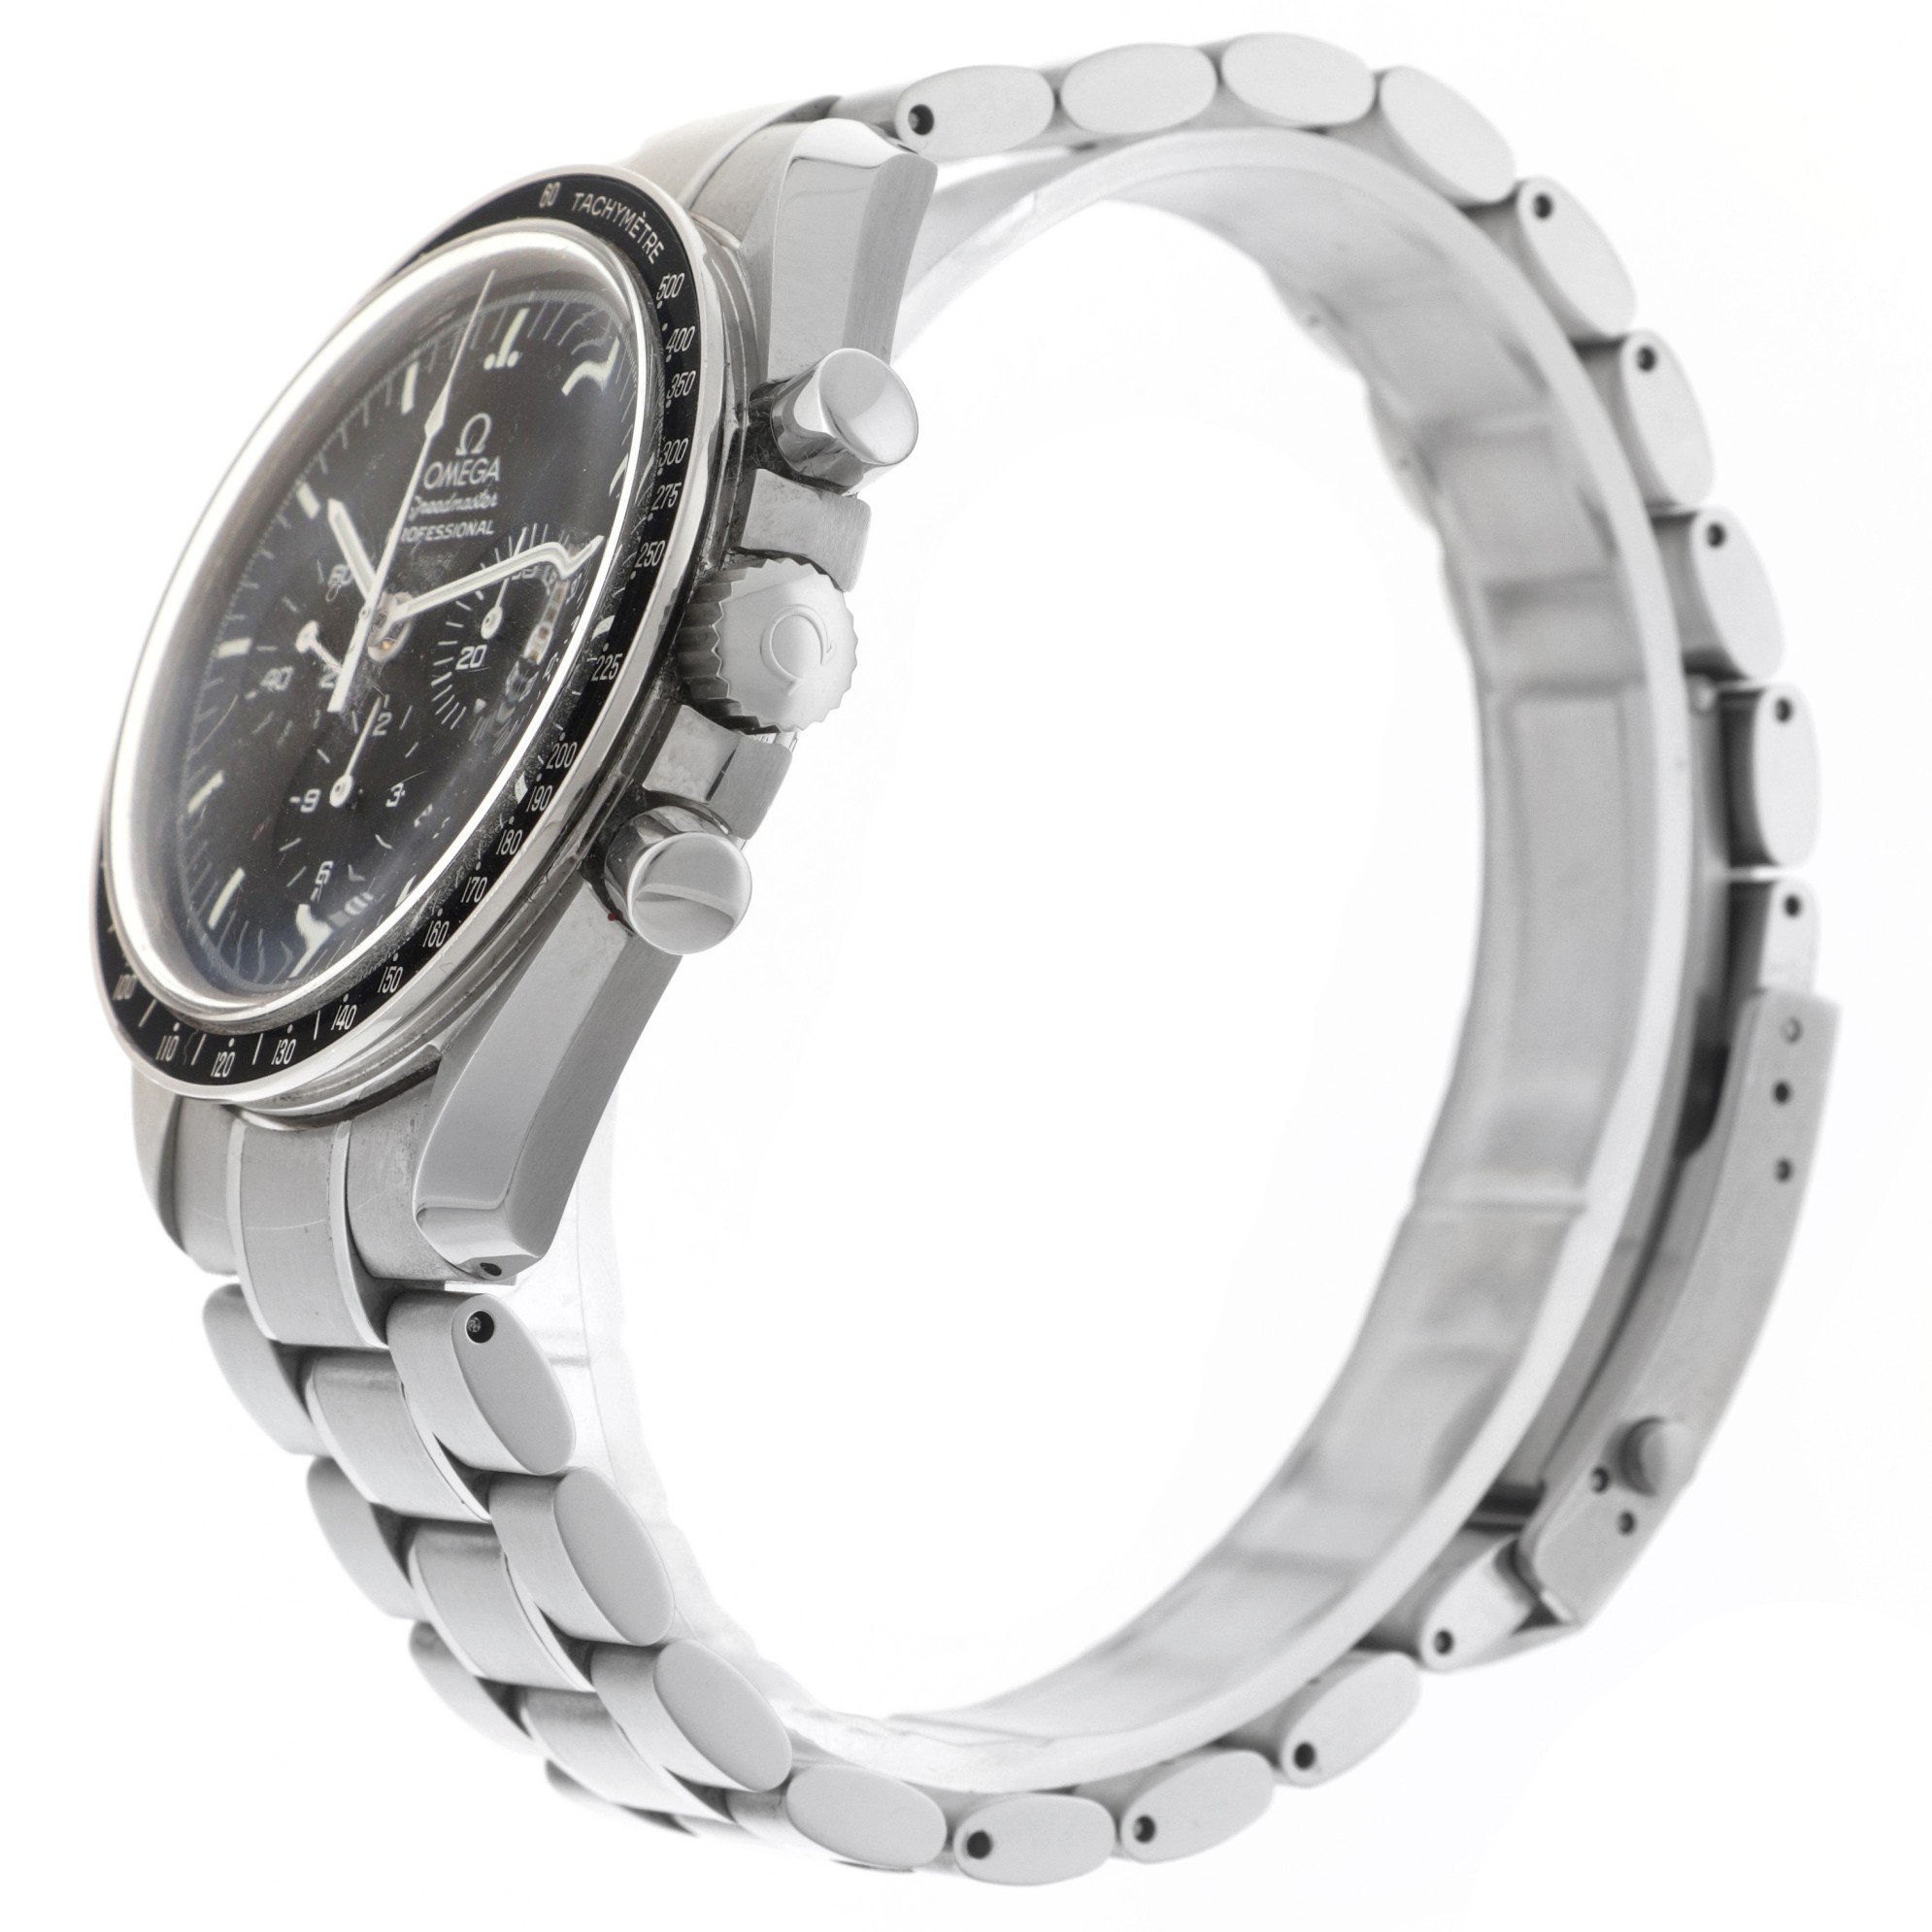 No Reserve - Omega Speedmaster Professional 35705000 - Men's watch - 2003. - Image 4 of 6